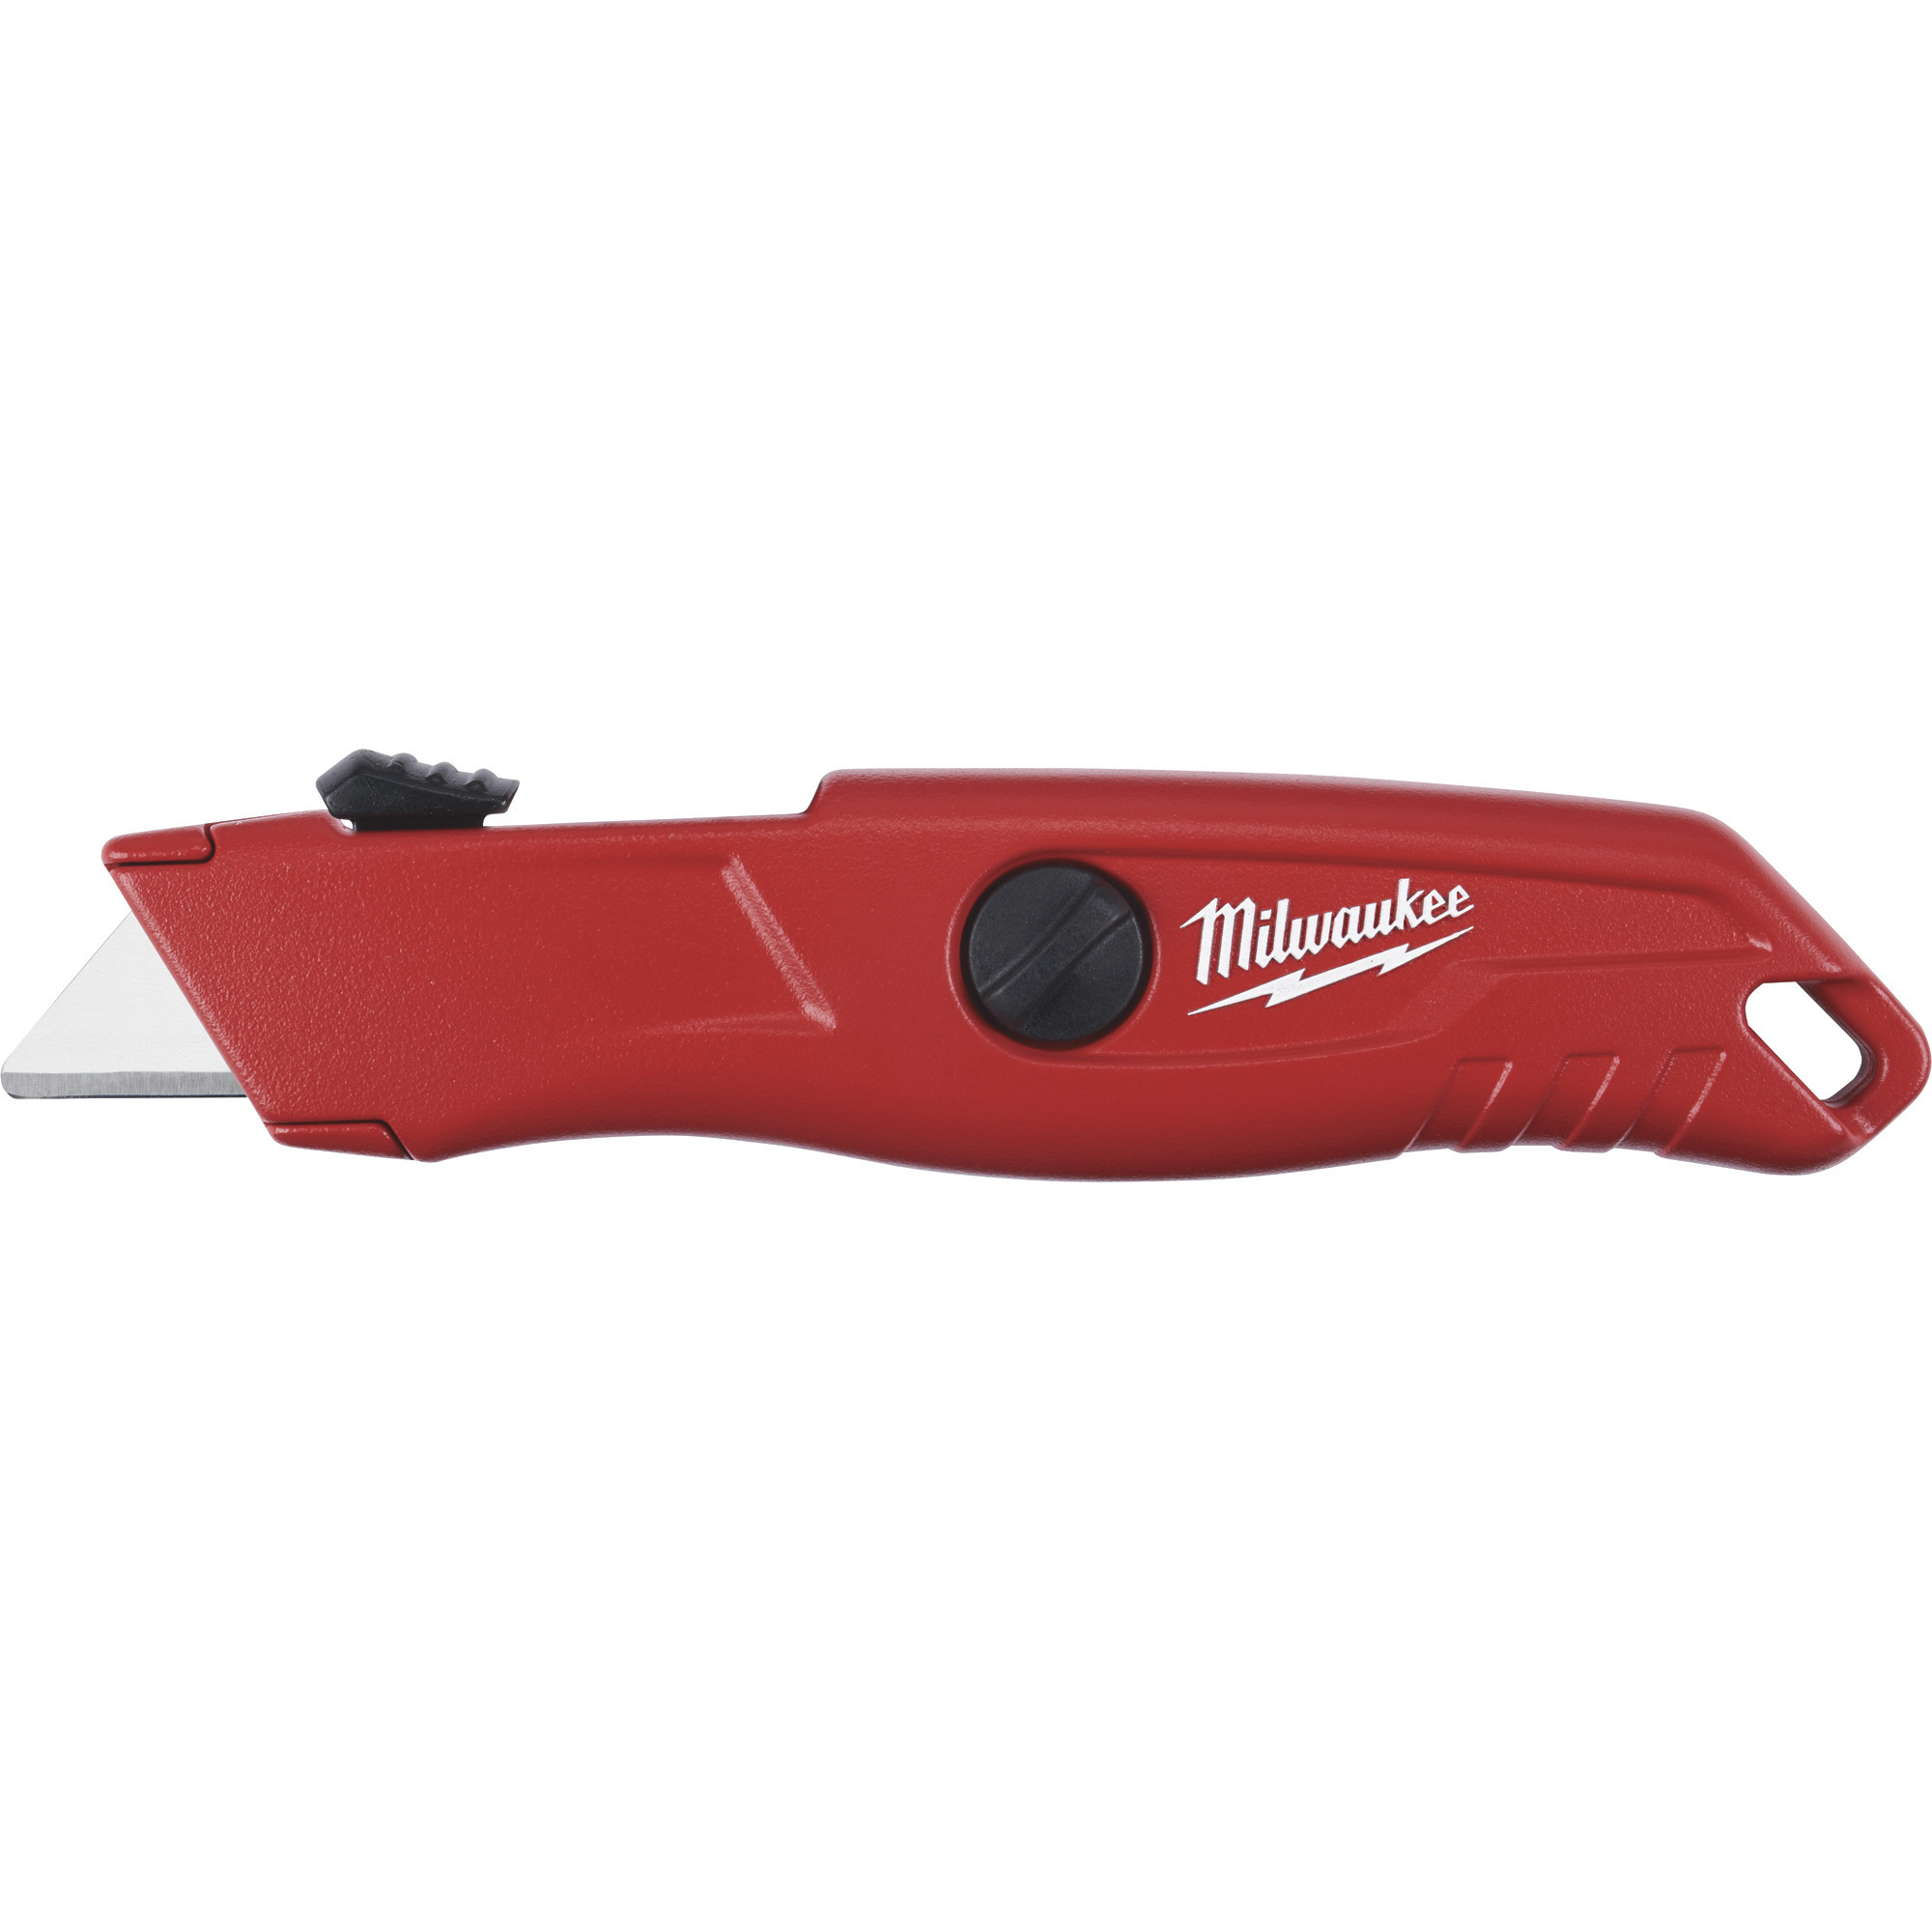 Milwaukee Self-Retracting Utility Knife, 6.52Inch L x 0.89Inch W x 1.41Inch Thick, Model 48-22-1512